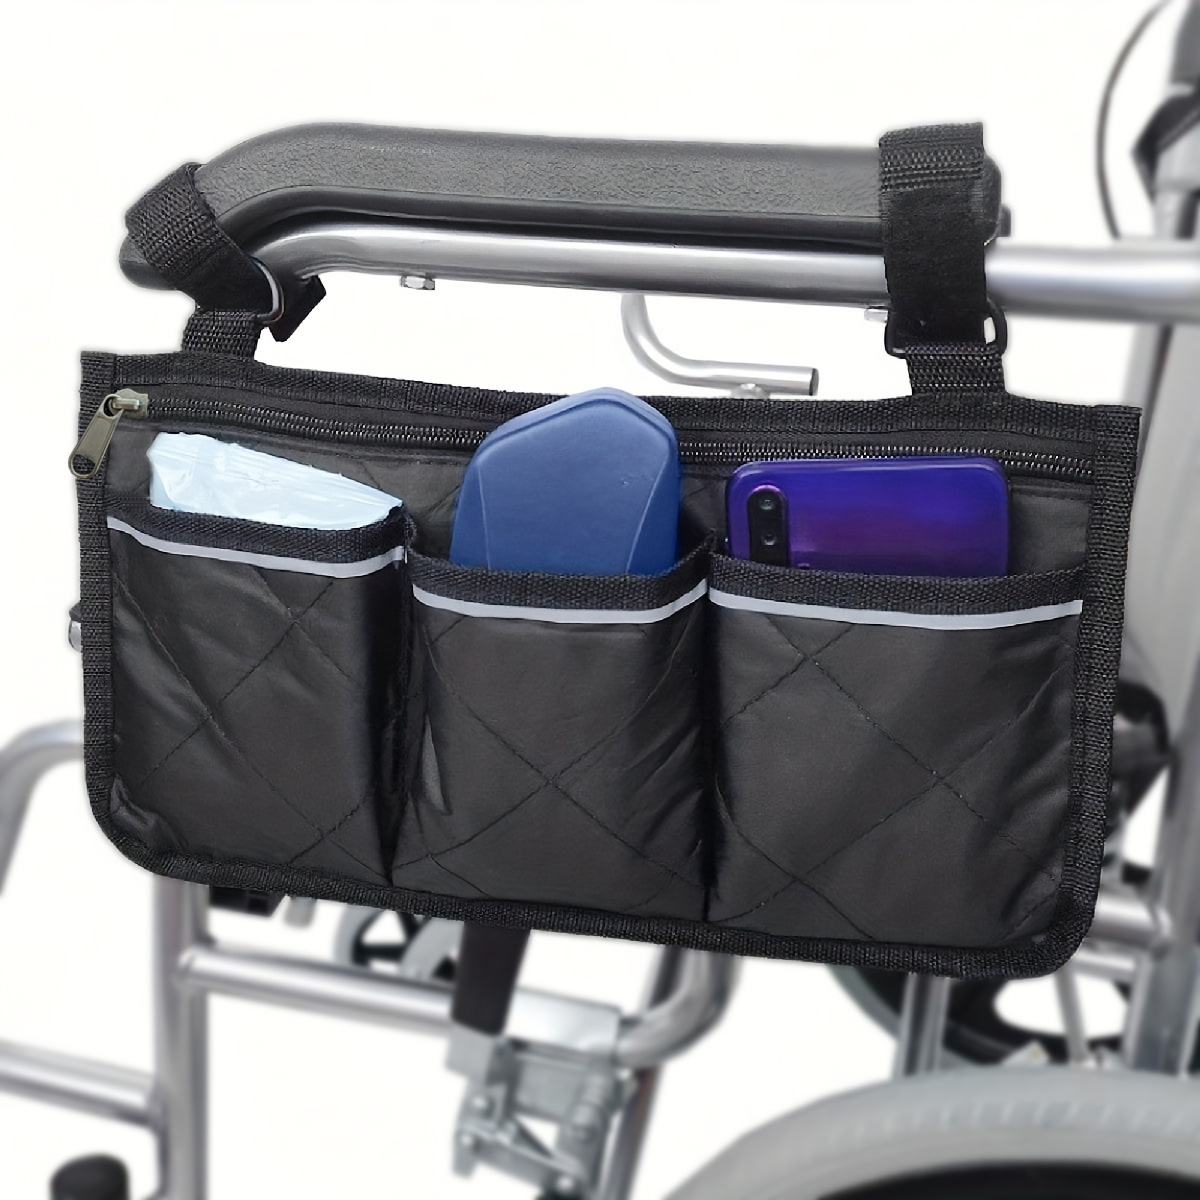 Organizador de almacenamiento de bolsa lateral colgante para silla de ruedas